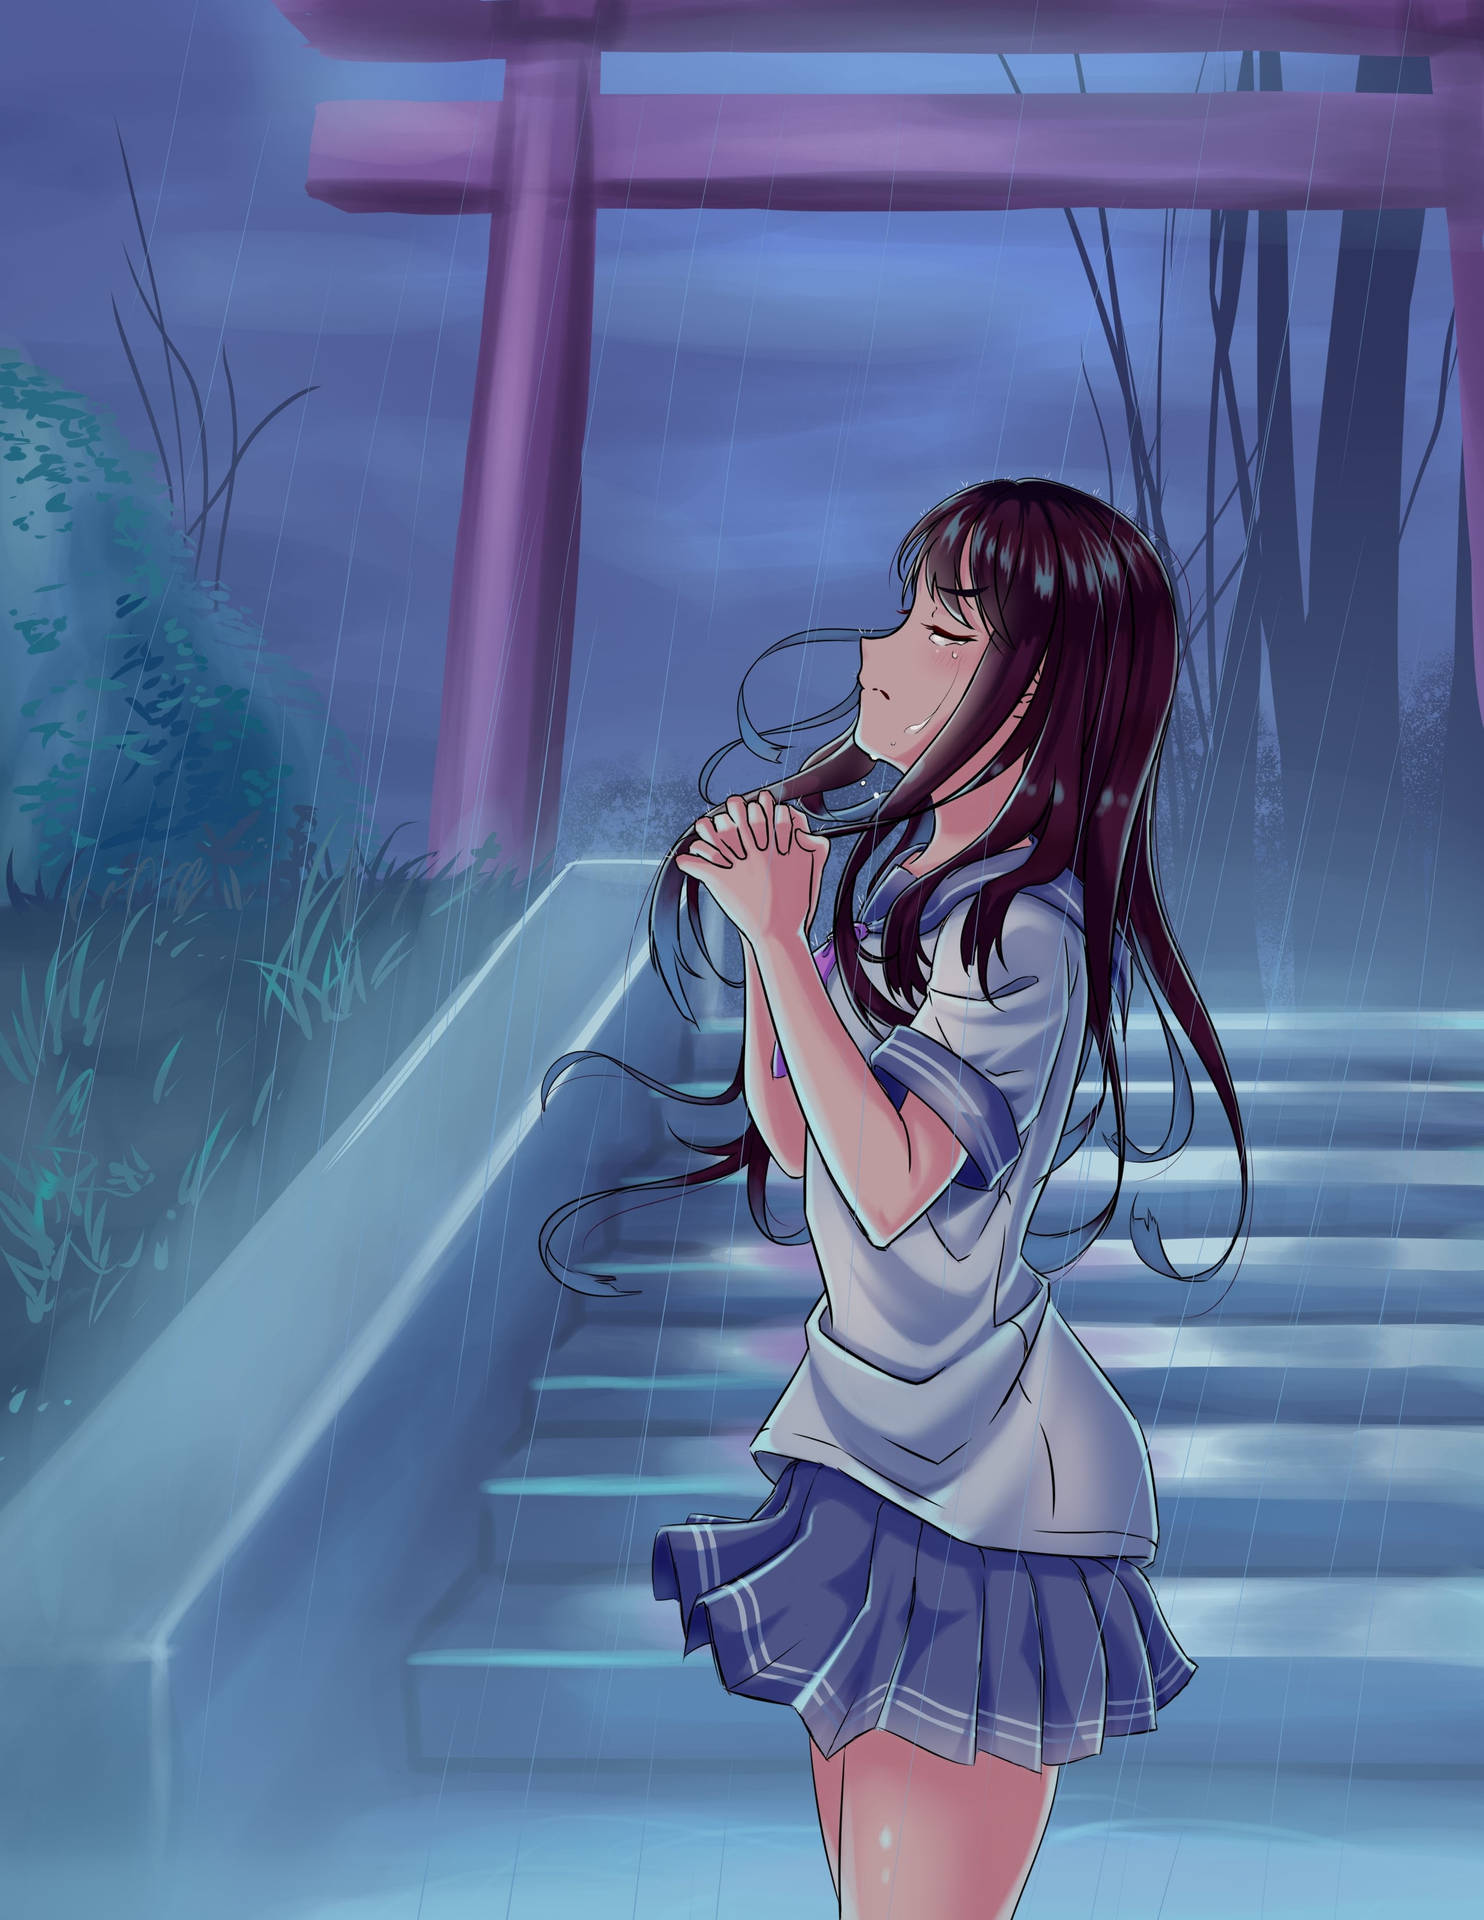 Aesthetic Sad Anime Girl Praying In Rain